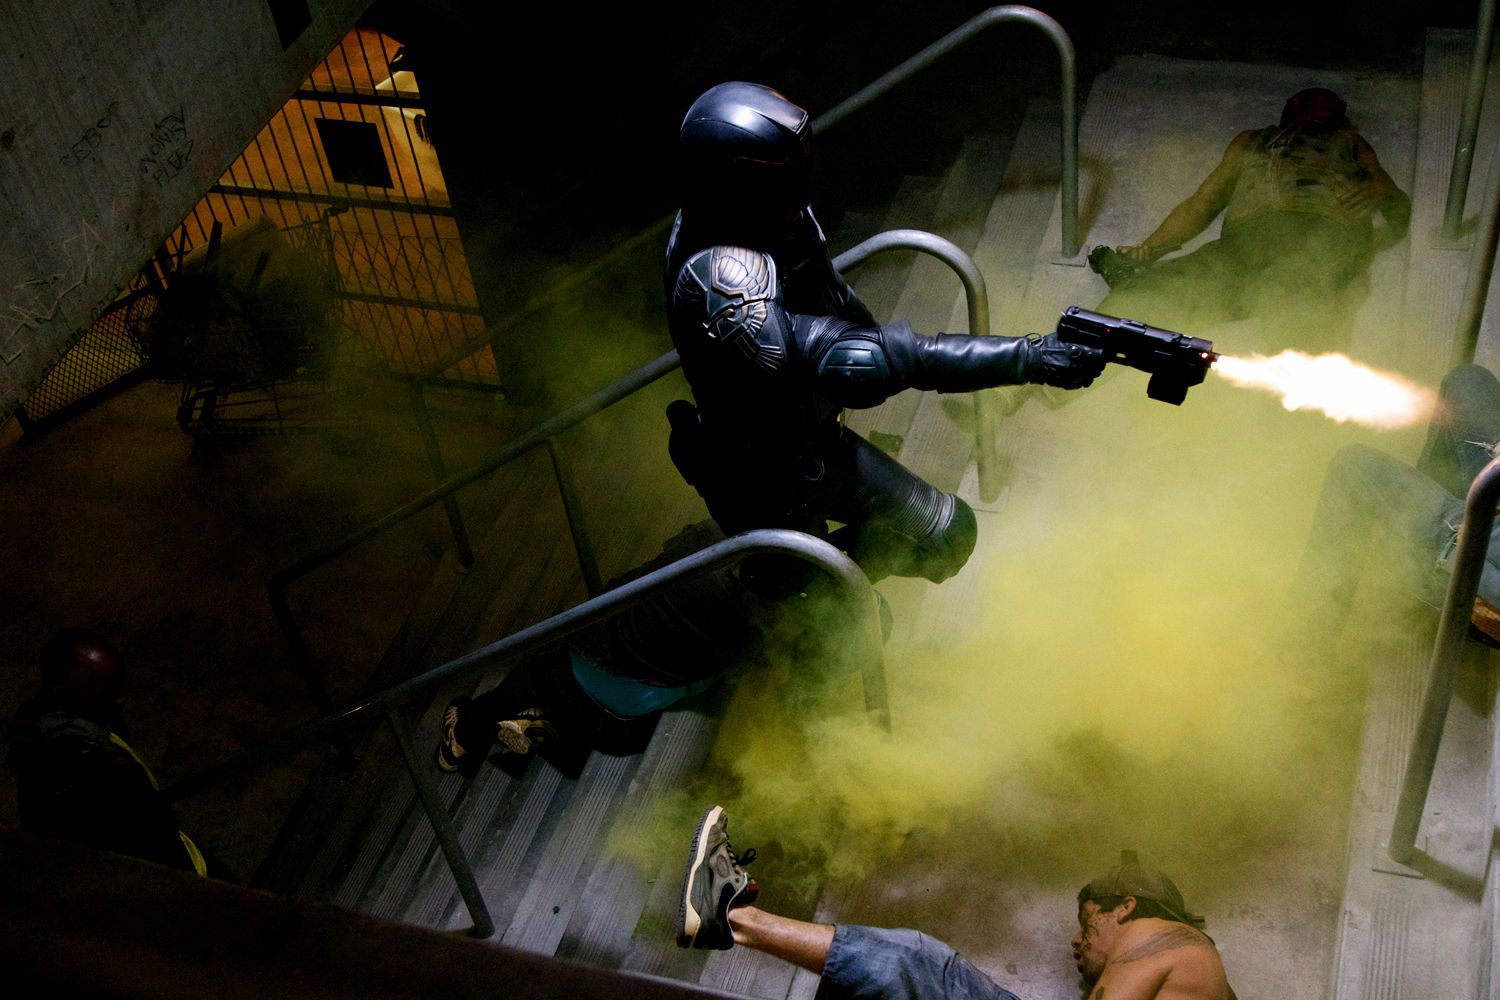 Judge Dredd Executes in 'Dredd' (2012)